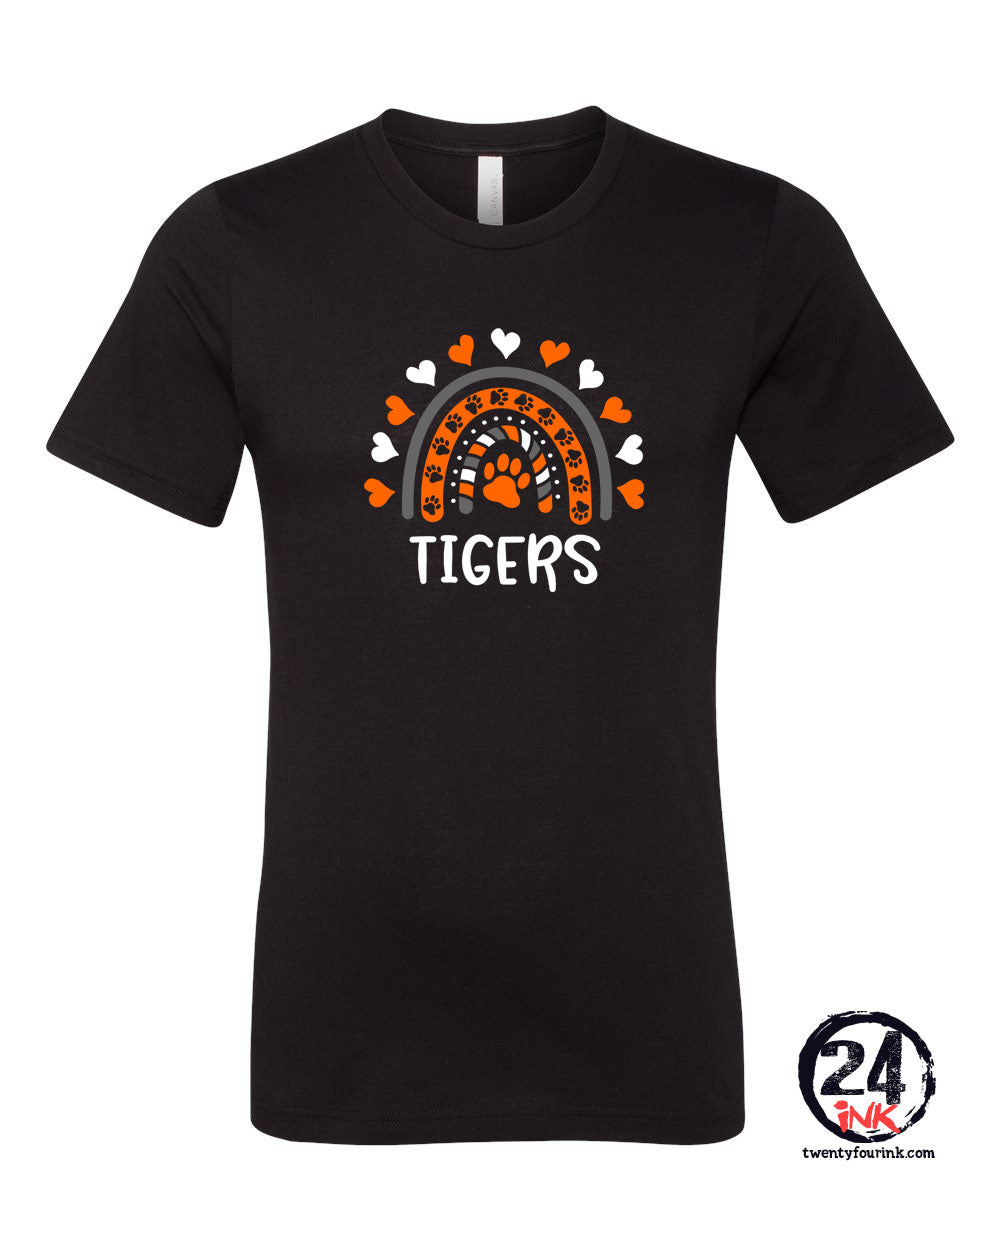 Tigers Design 4 raglan shirt